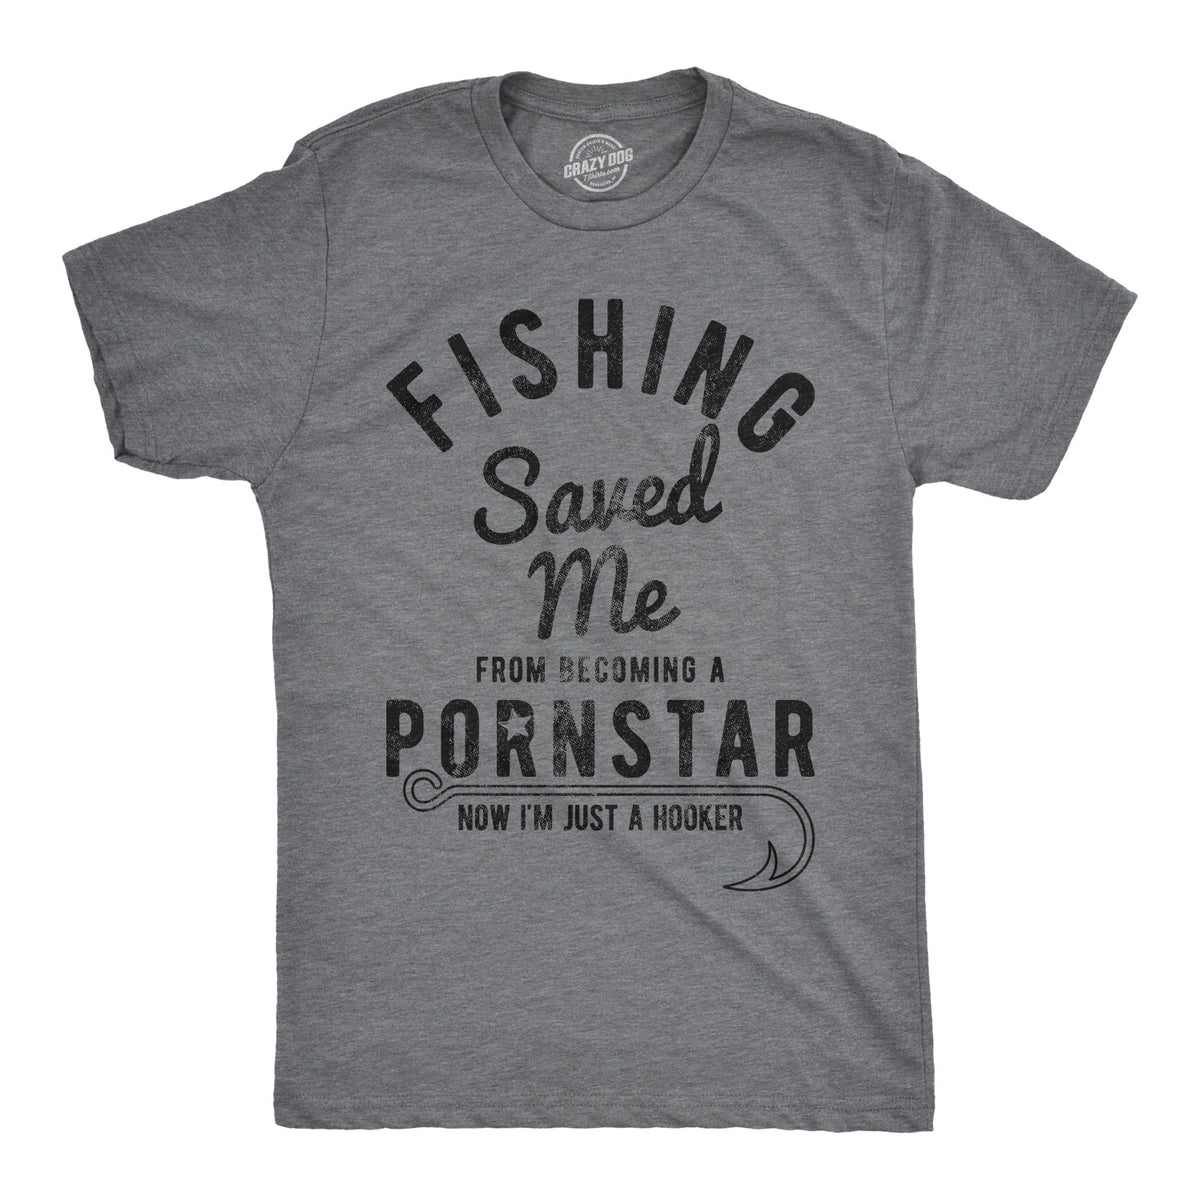 Hot Fisherman Funny - Funny Fishing Shirts Gift for Men - Graphic T-shirts